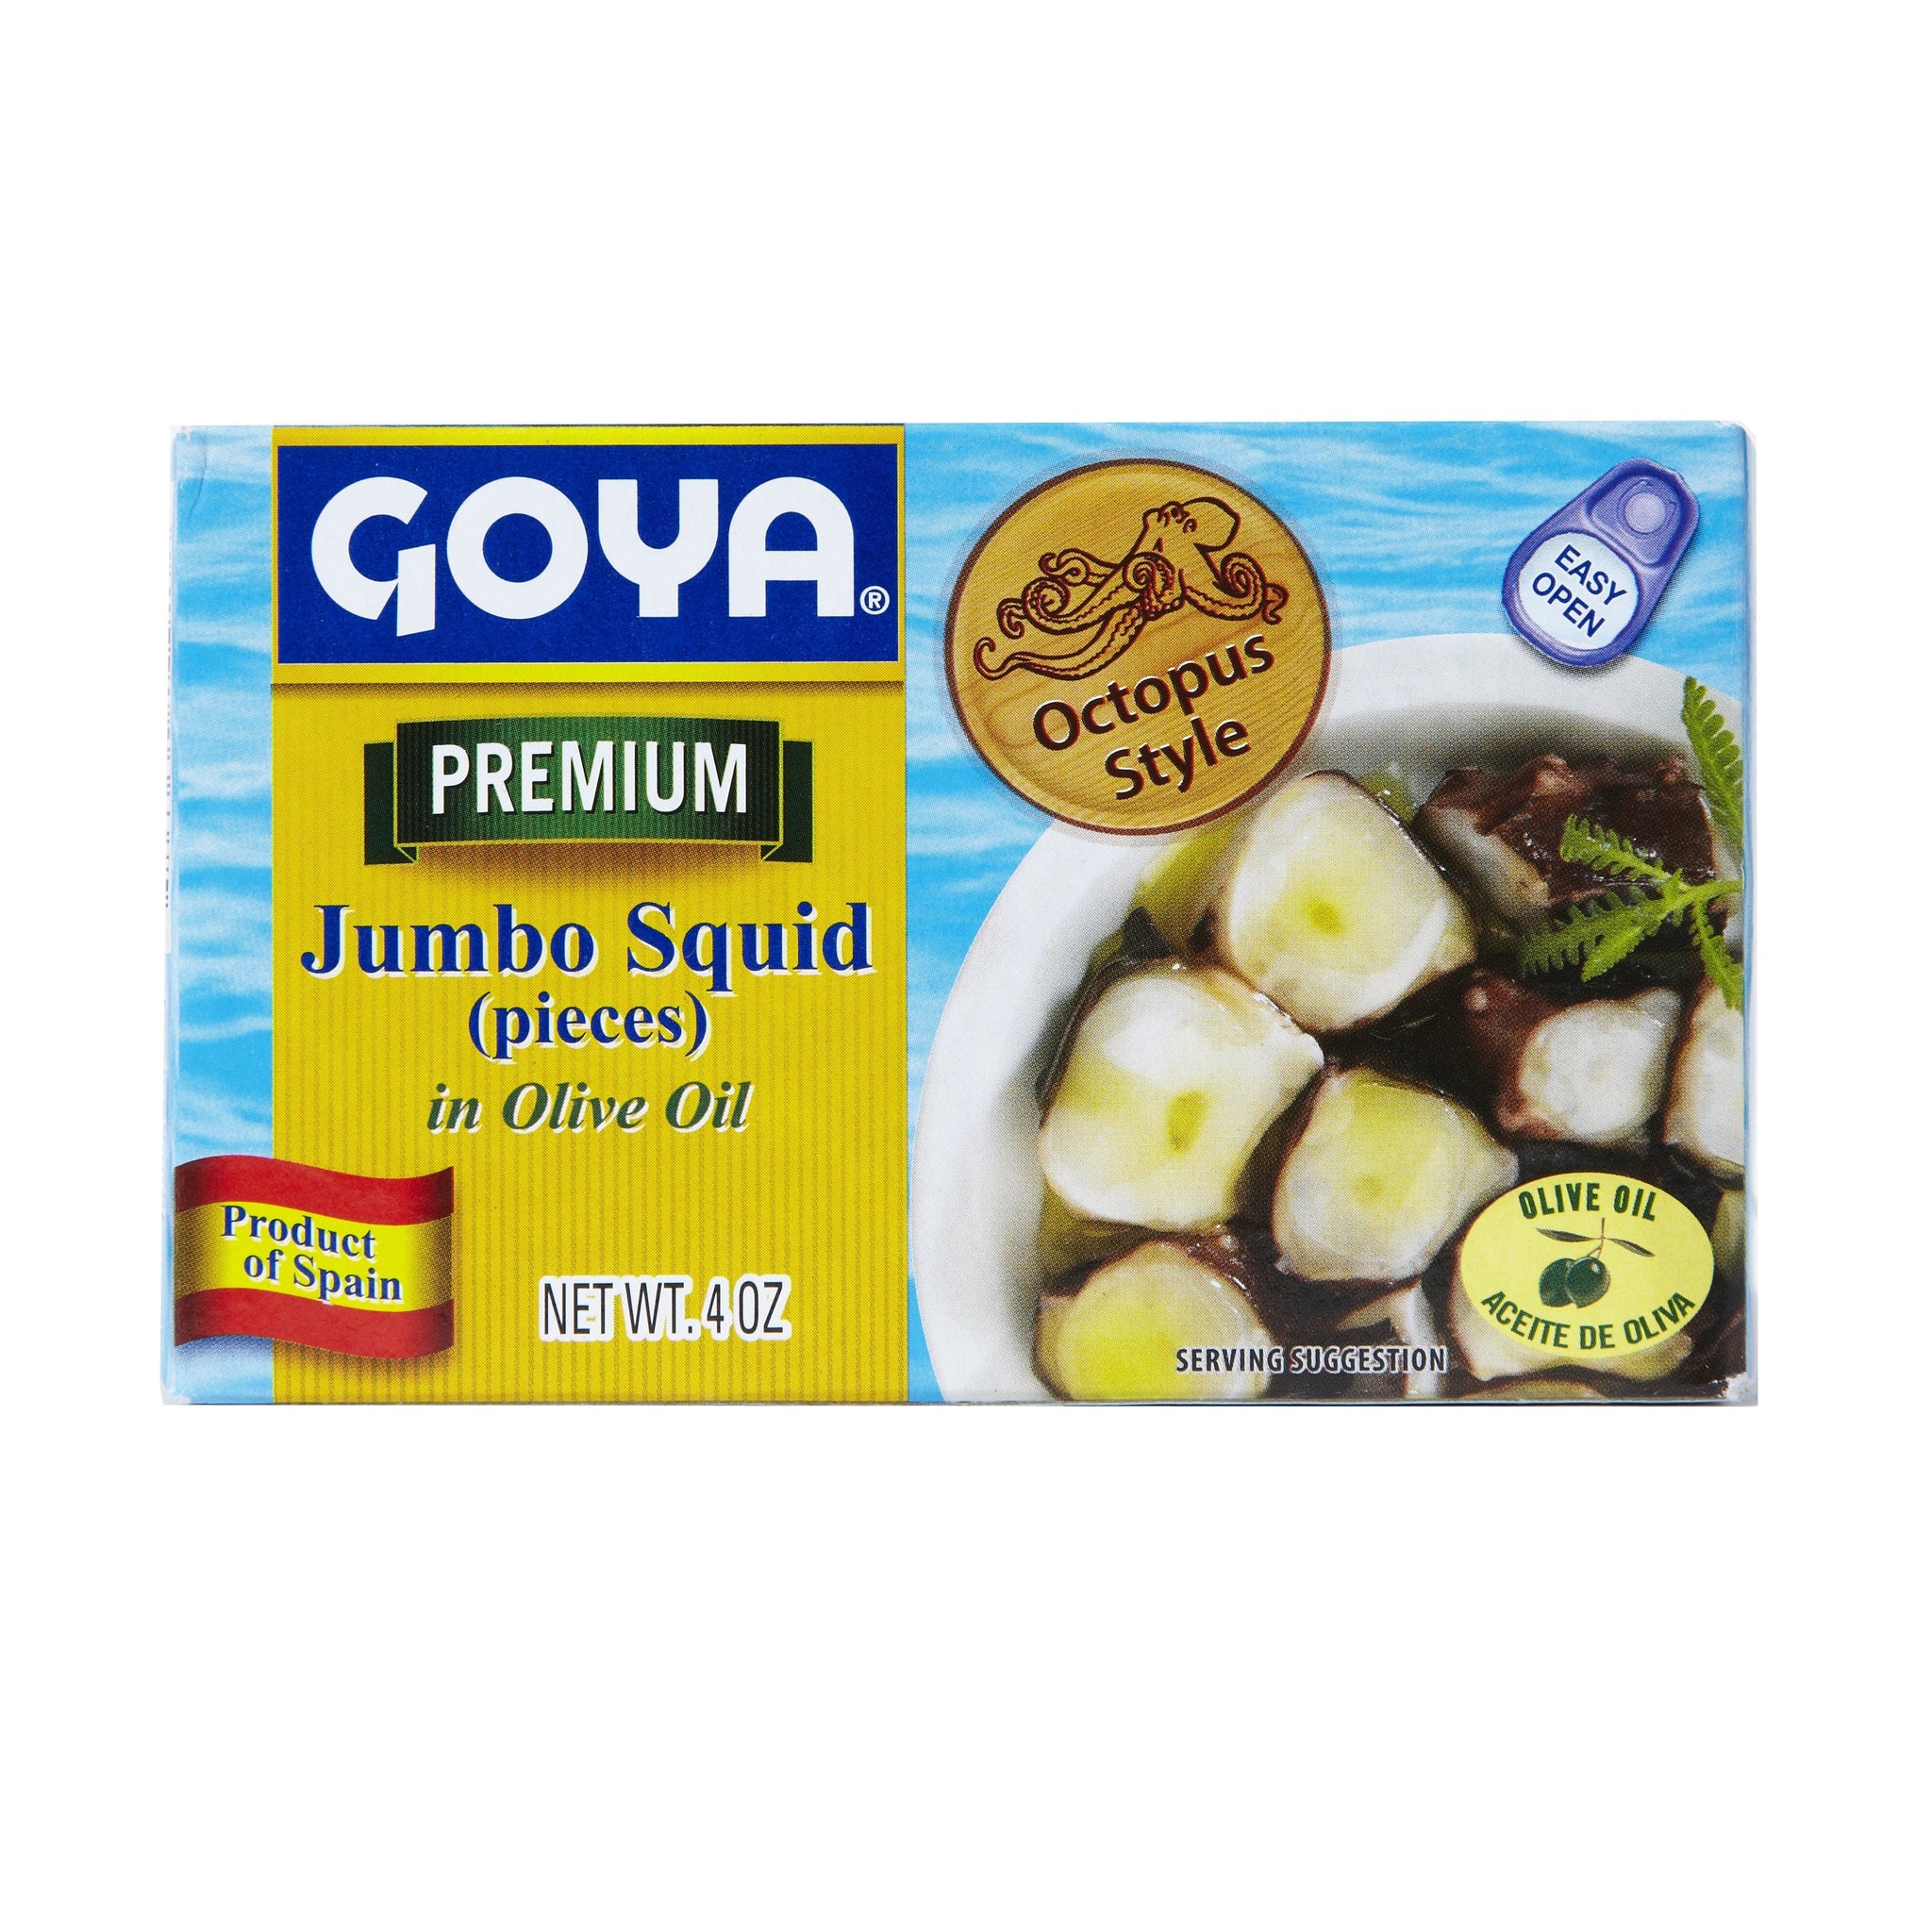 Goya Premium Jumbo Squid in Olive Oil Octopus Style, 4 OZ (Pack of 25)